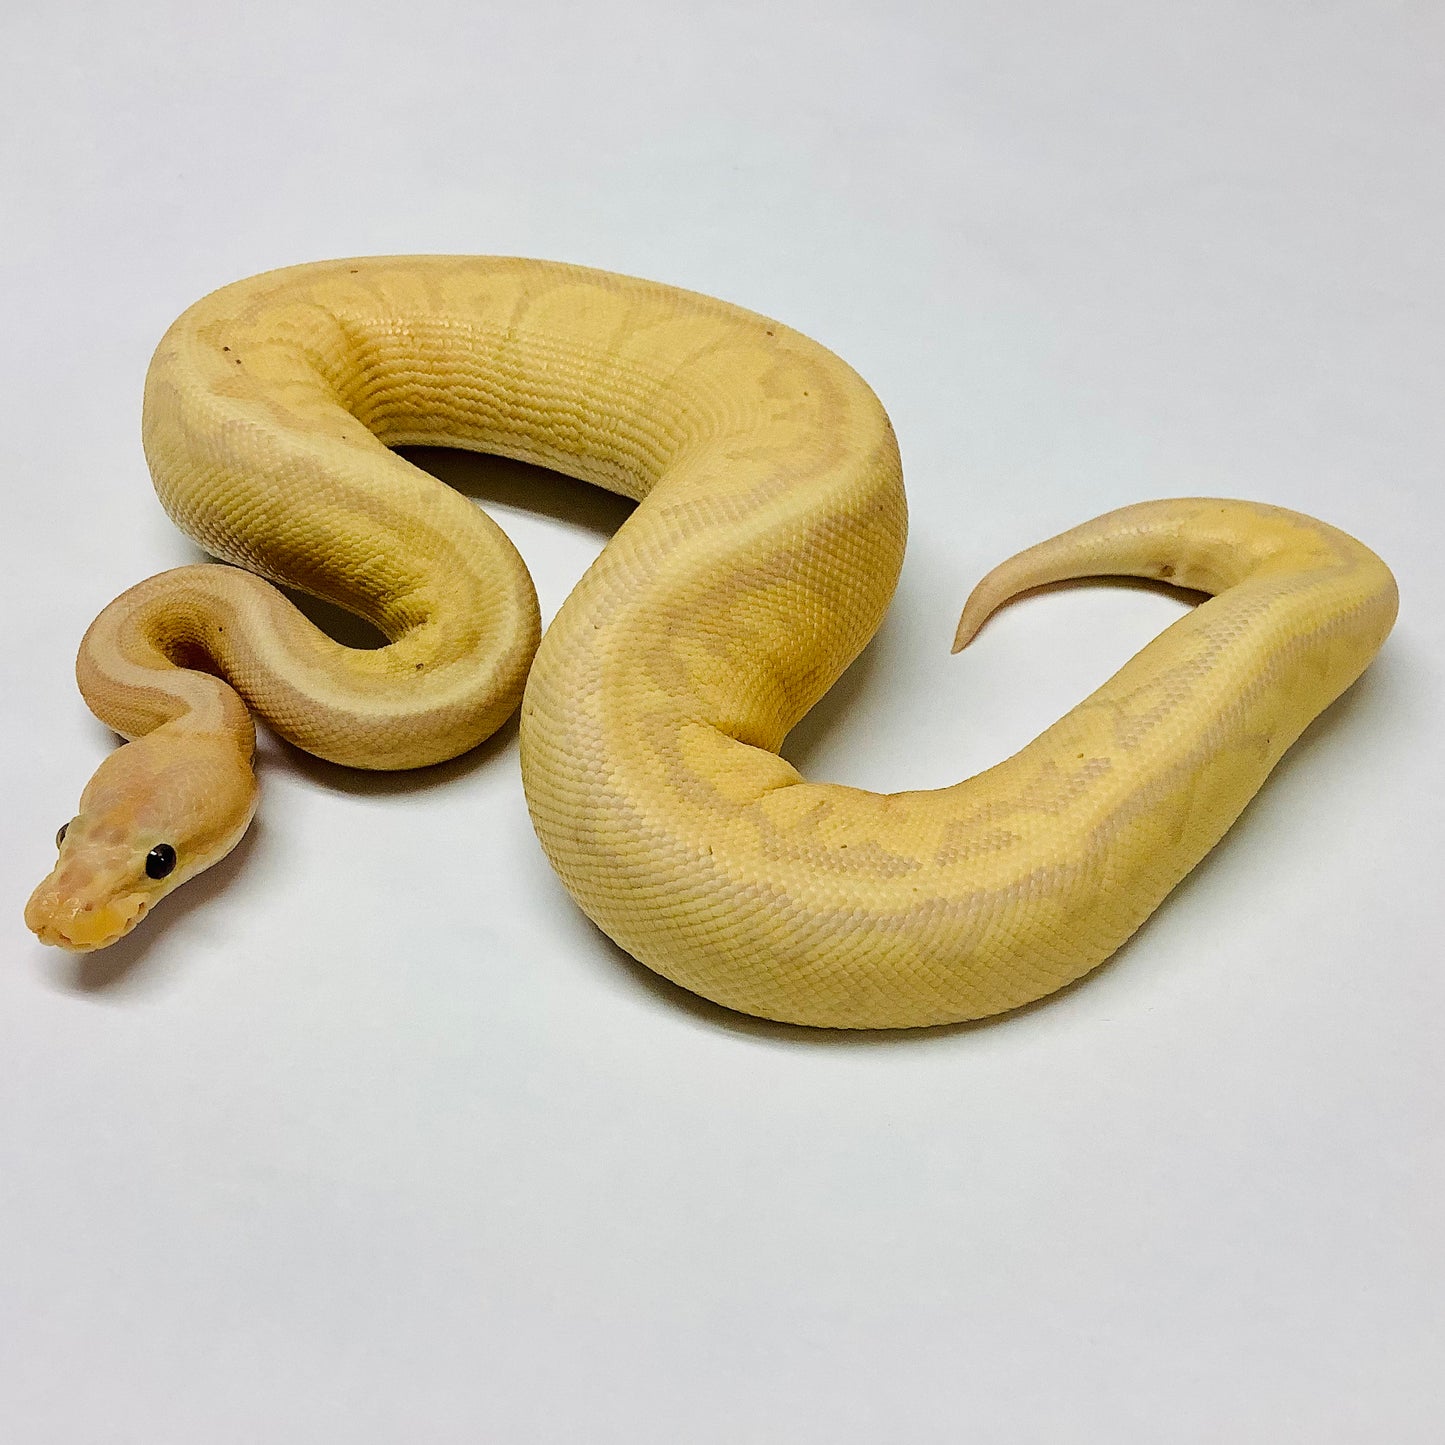 Banana Chocolate Pinstripe Ball Python - Male #2021M03-1